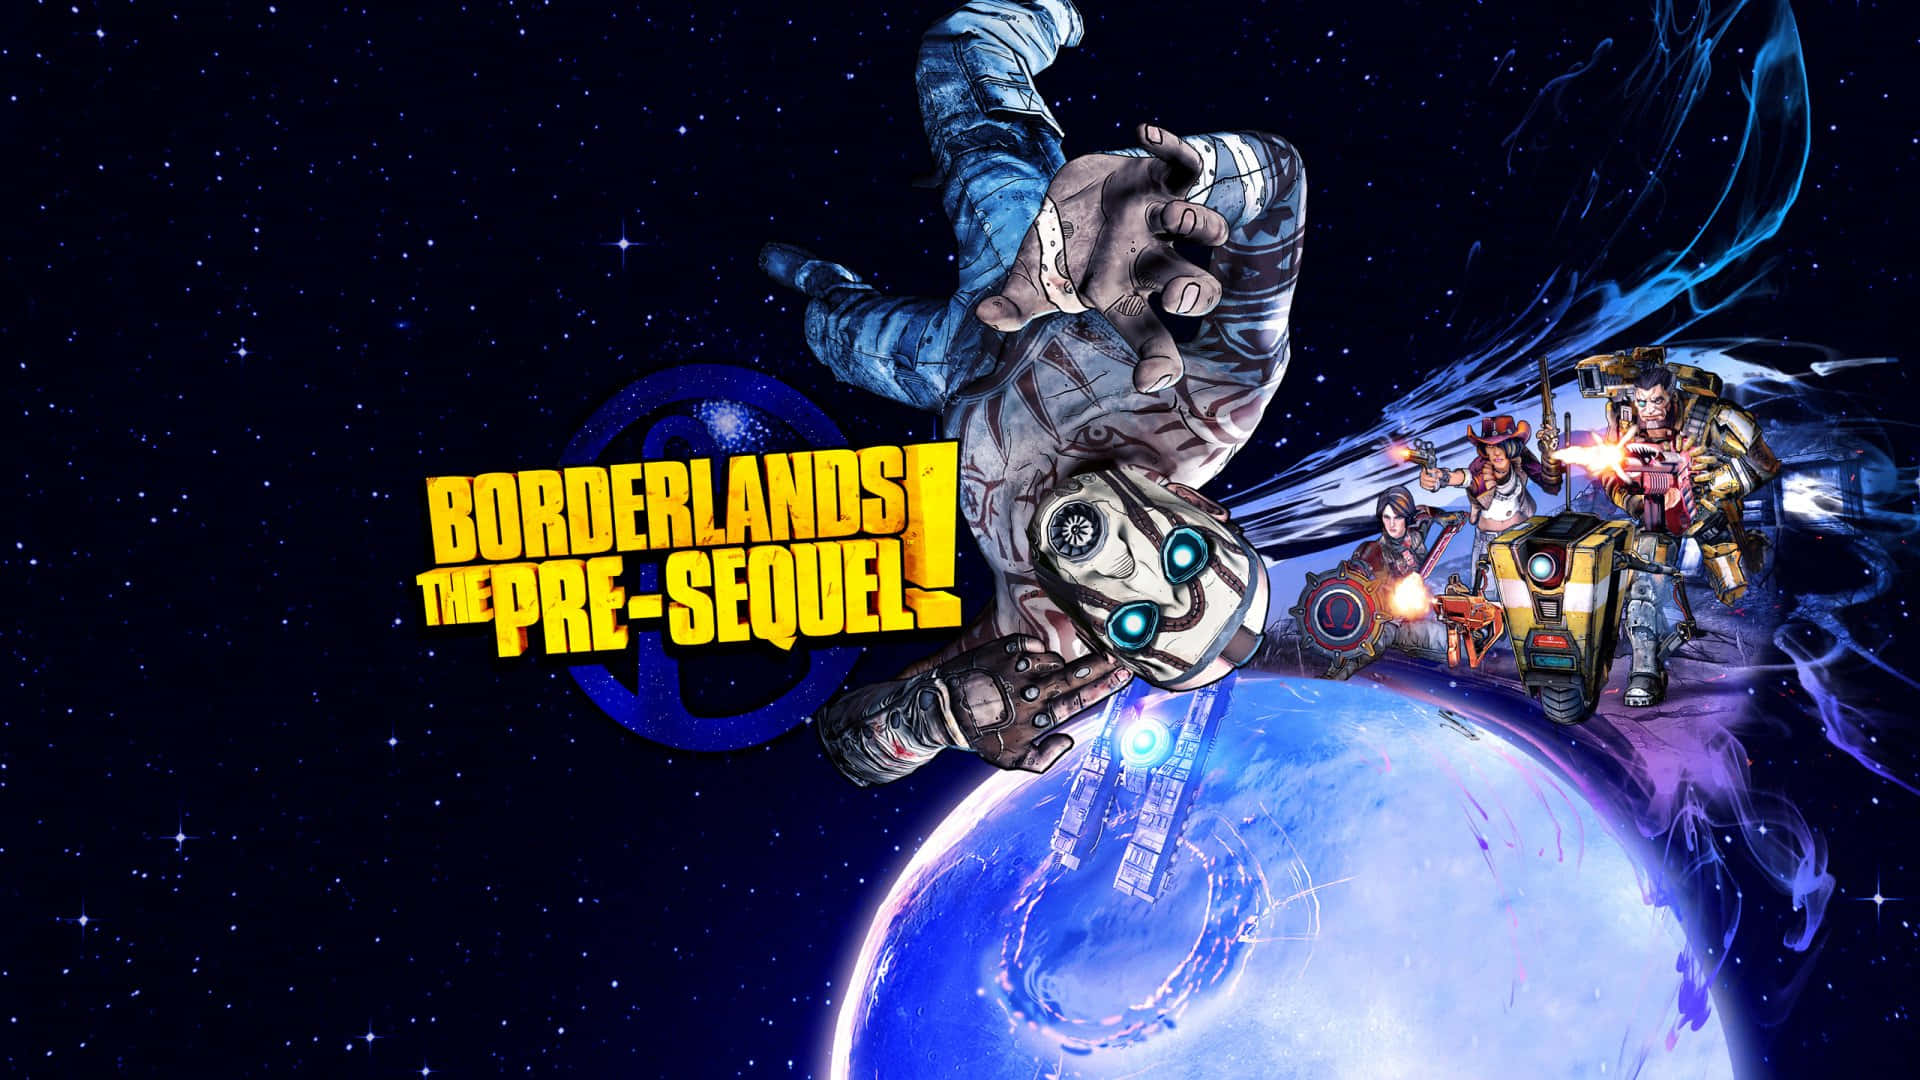 Take on the ultimate Borderlands 3 adventure!